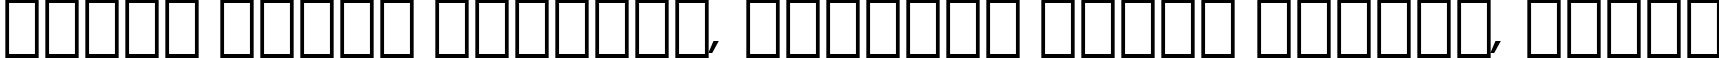 Пример написания шрифтом Zurich Light Condensed Italic BT текста на белорусском